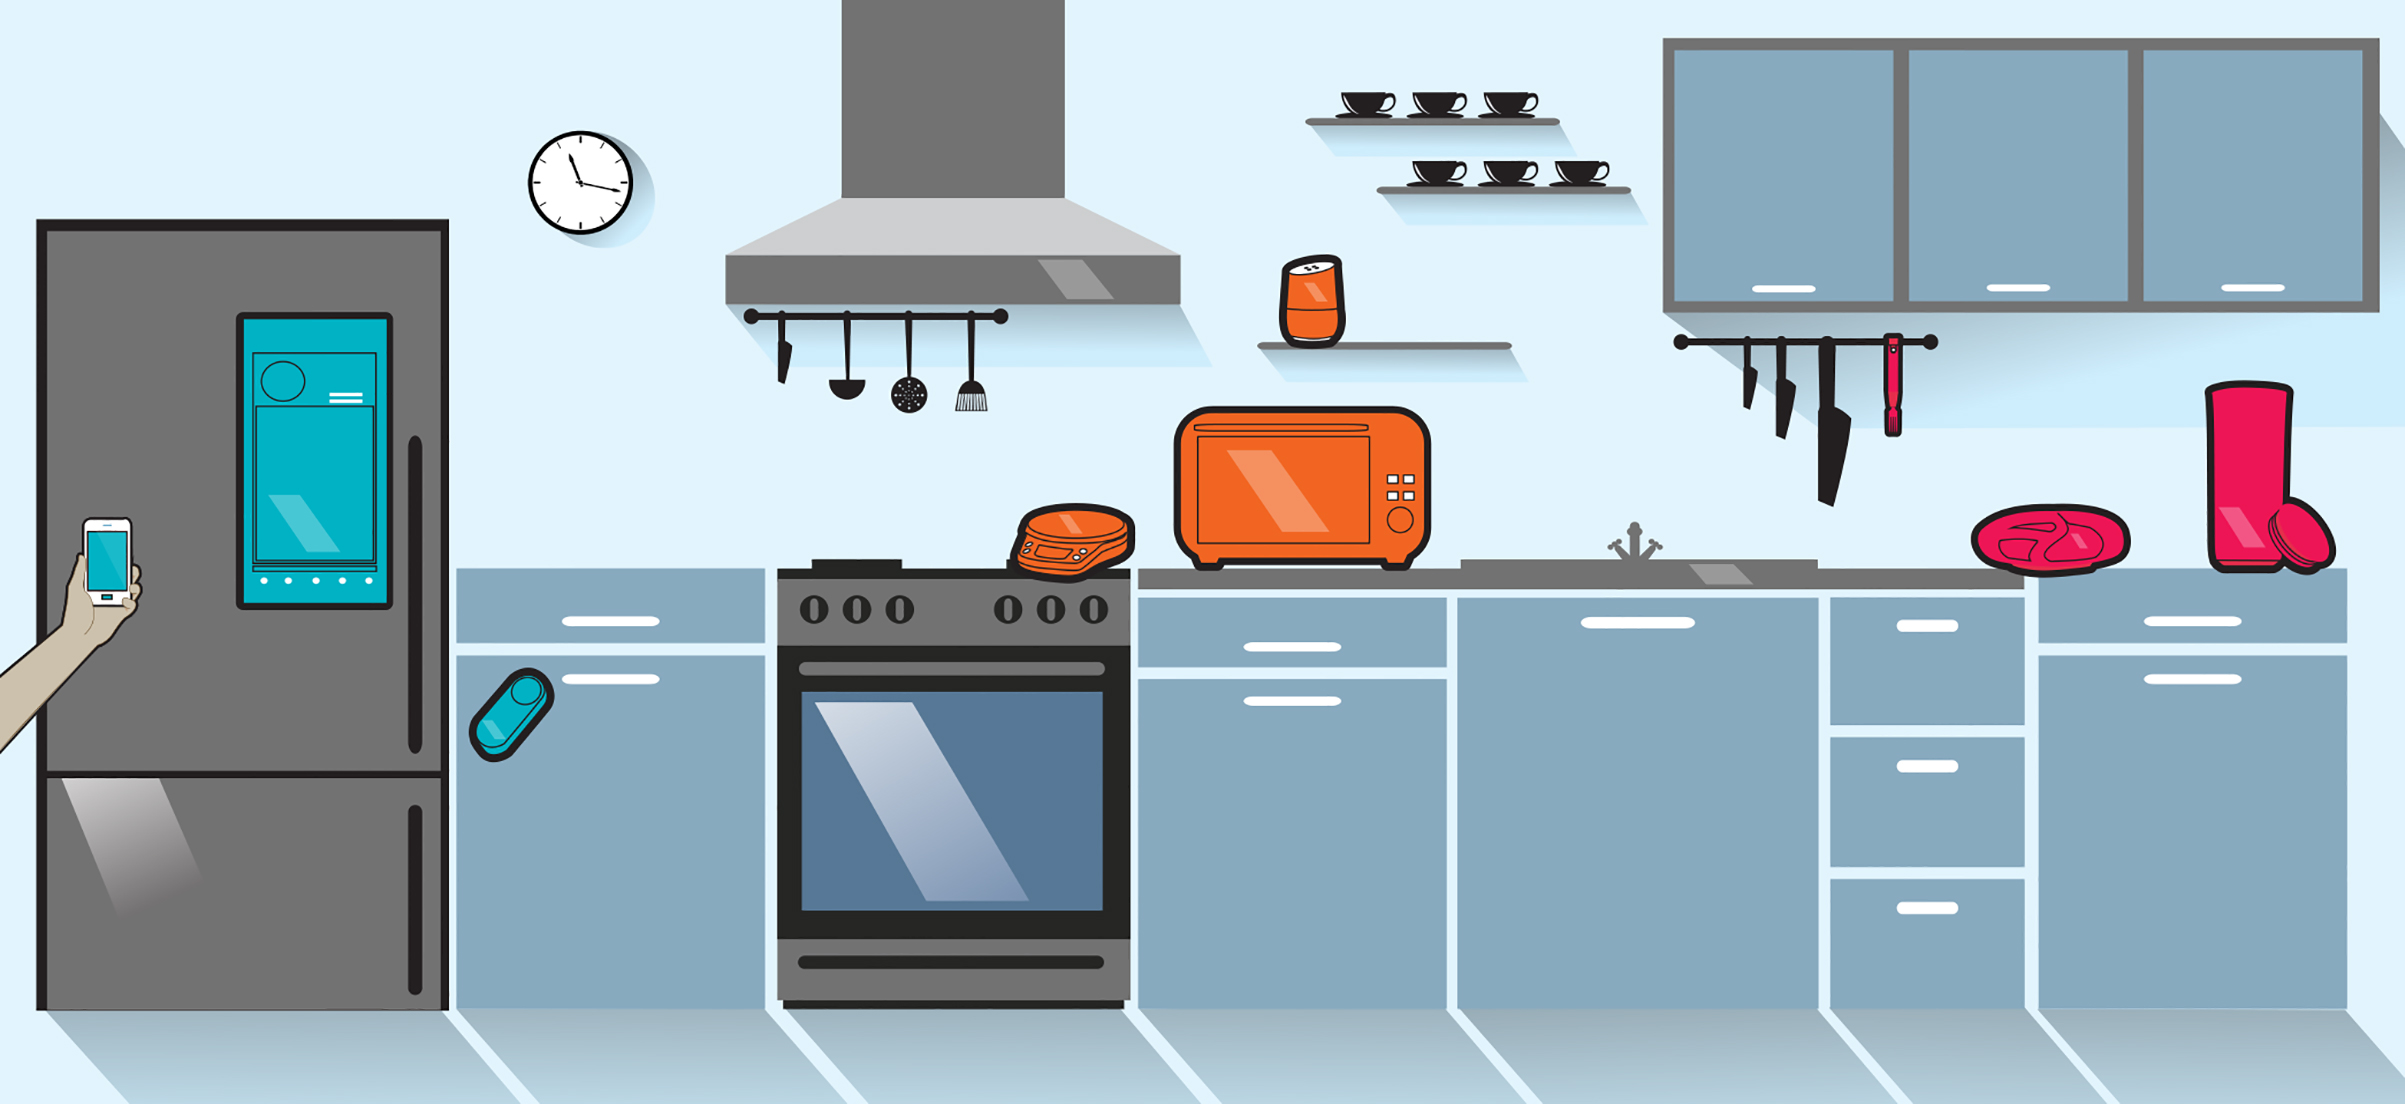 smart-home-getting-bot-kitchen